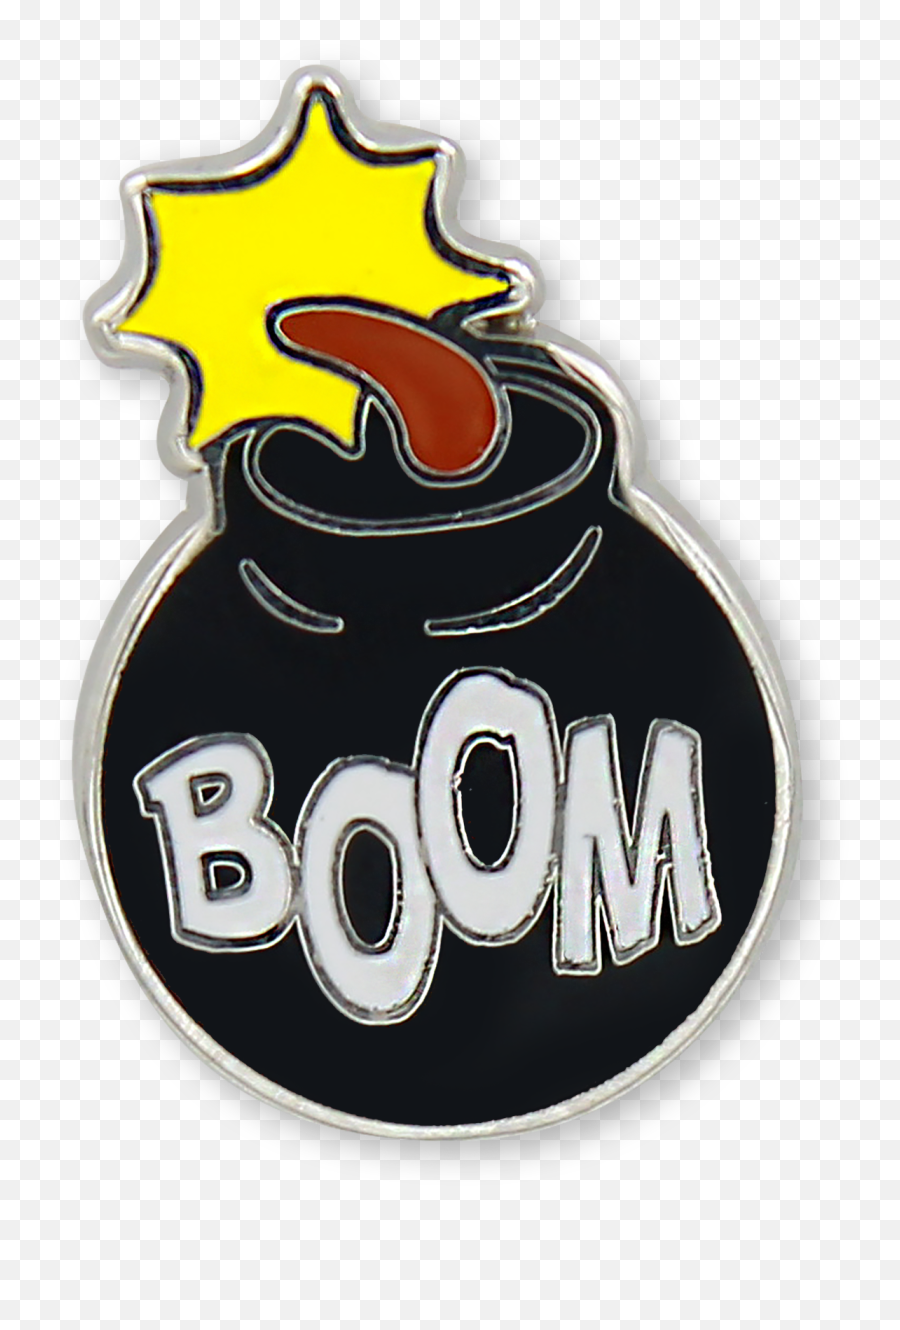 Emoji Poo Bomb - Flame,Bomb Emoji Png